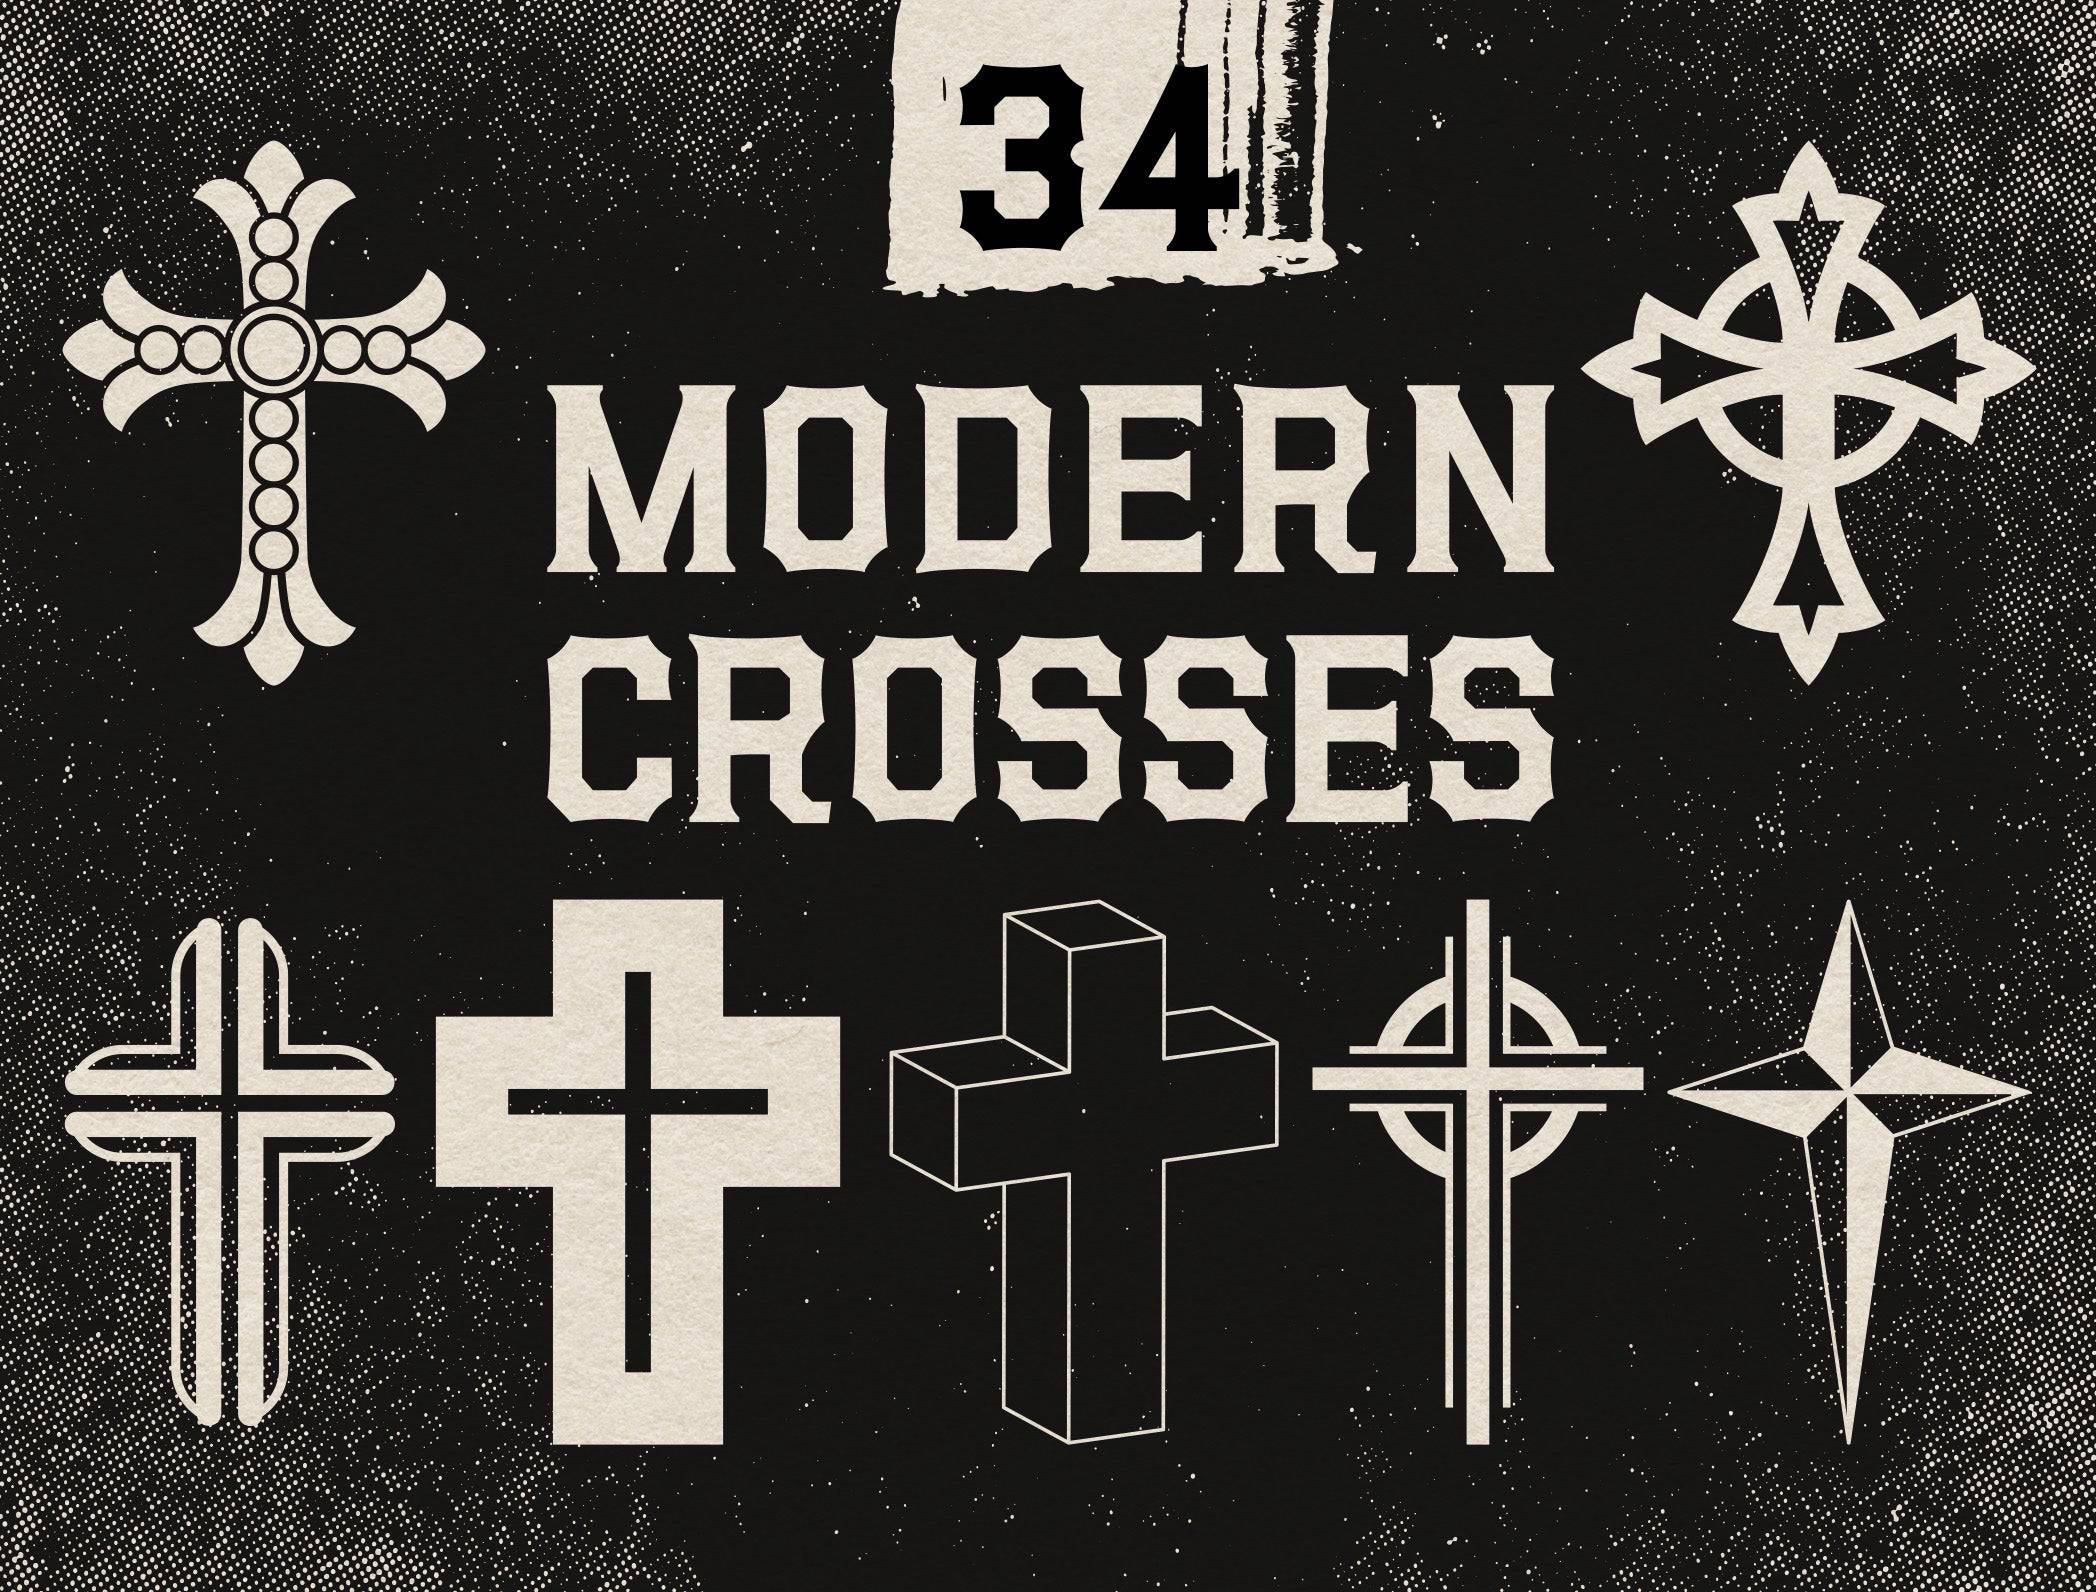 CRASPIRE 3pcs Cross Metal Cutting Dies Stencils for Card Making Christ